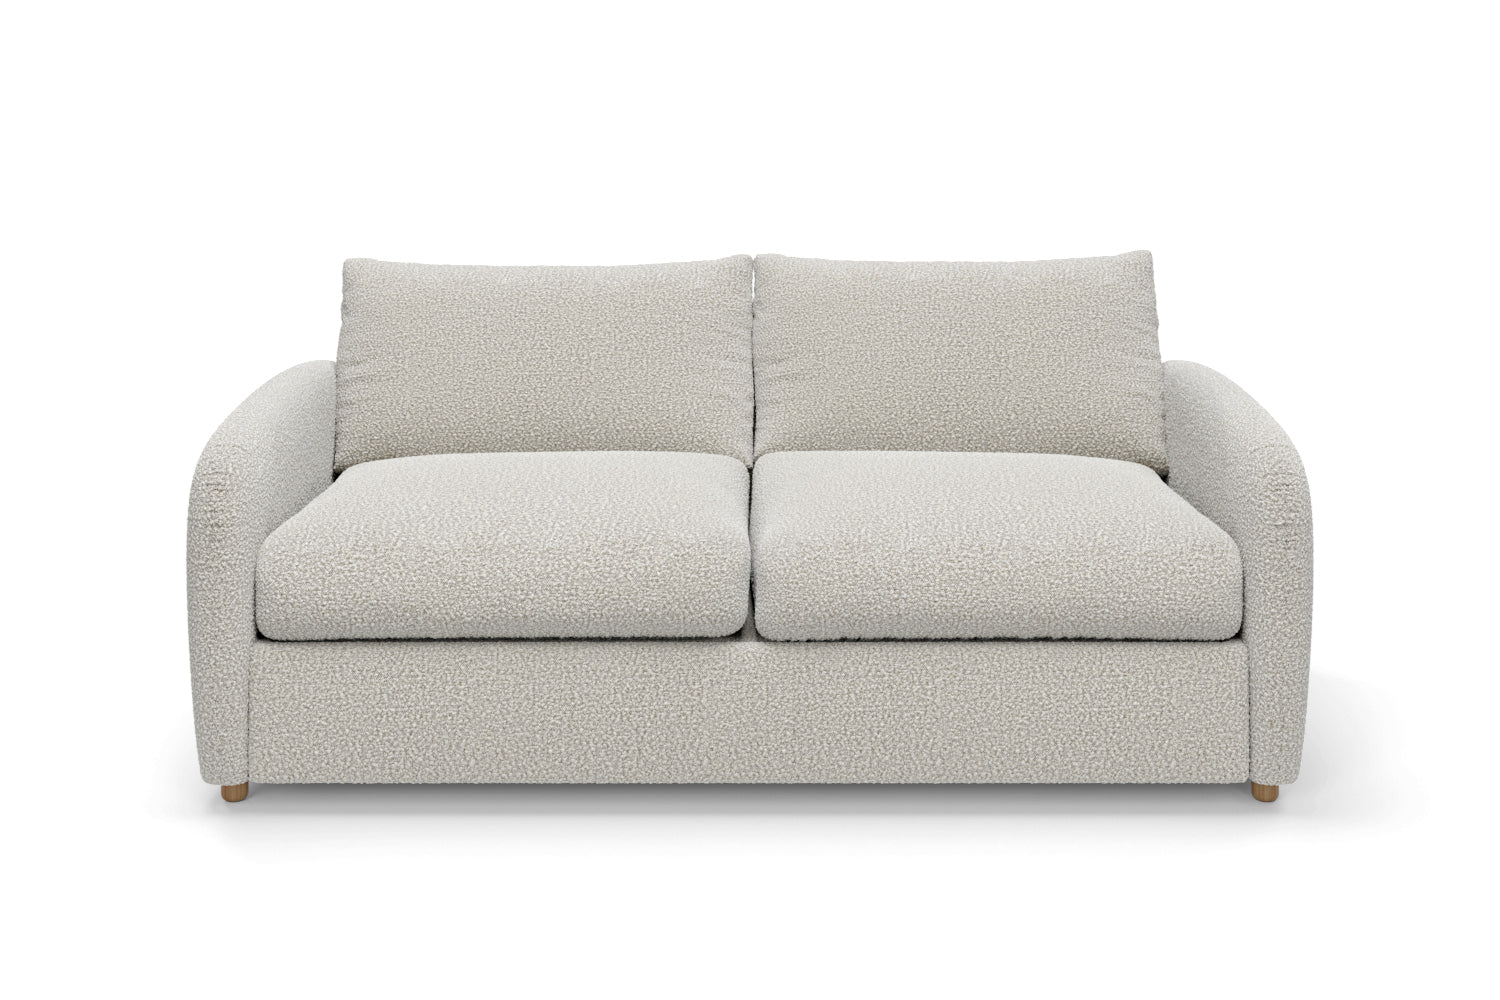 The Small Biggie - 3 Seater Sofa - Fuzzy White Boucle